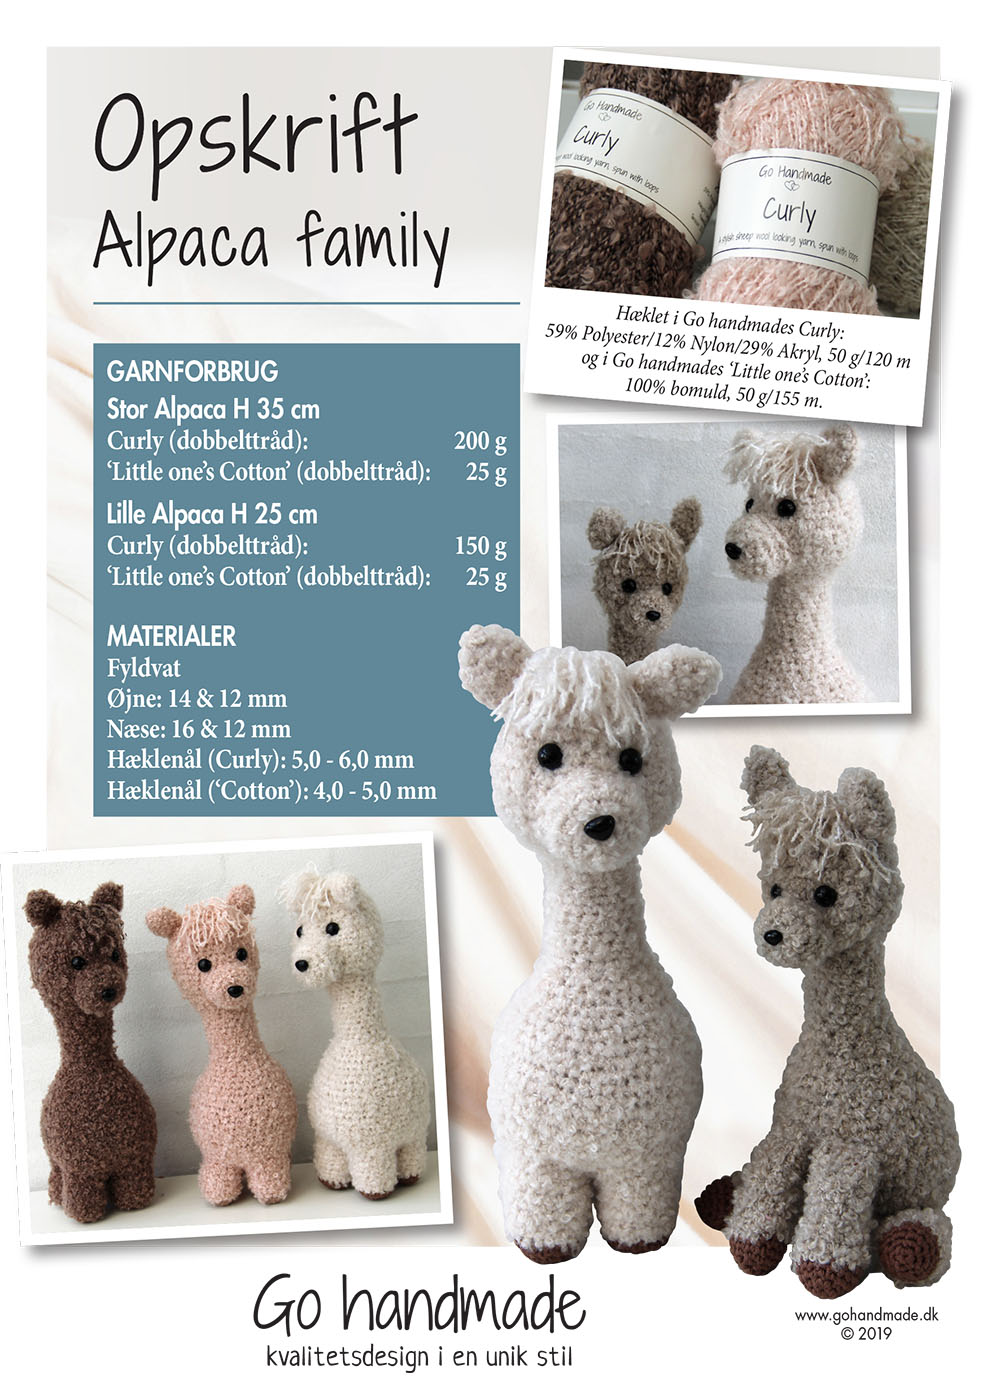 Alpaca Family Dk Animals Go Handmade